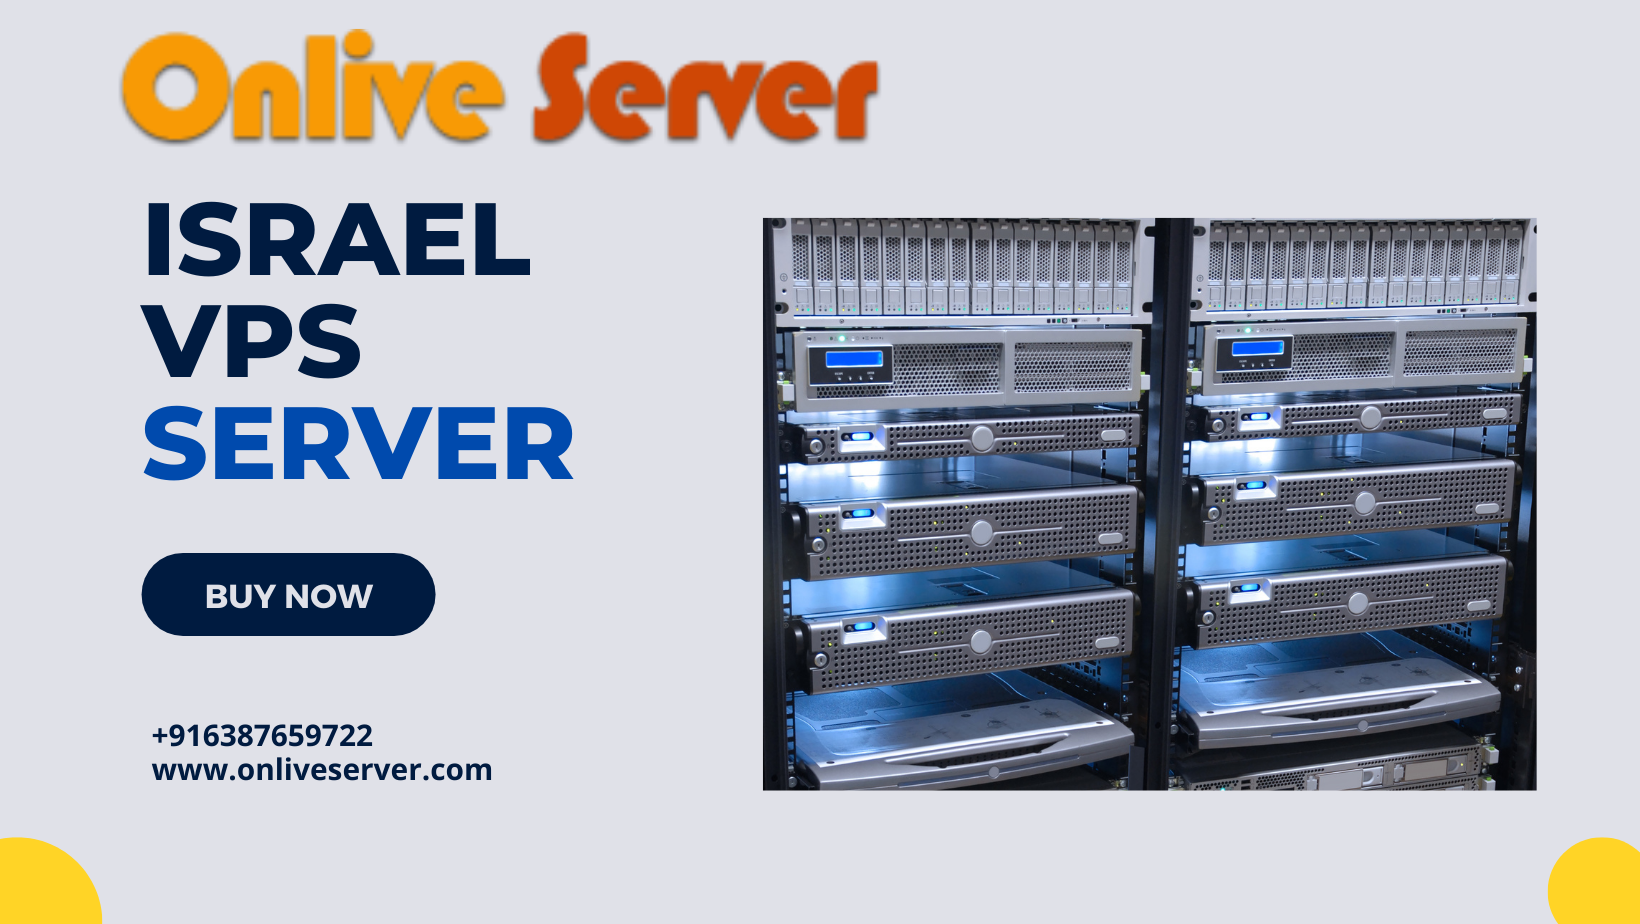 Israel VPS Server (2)